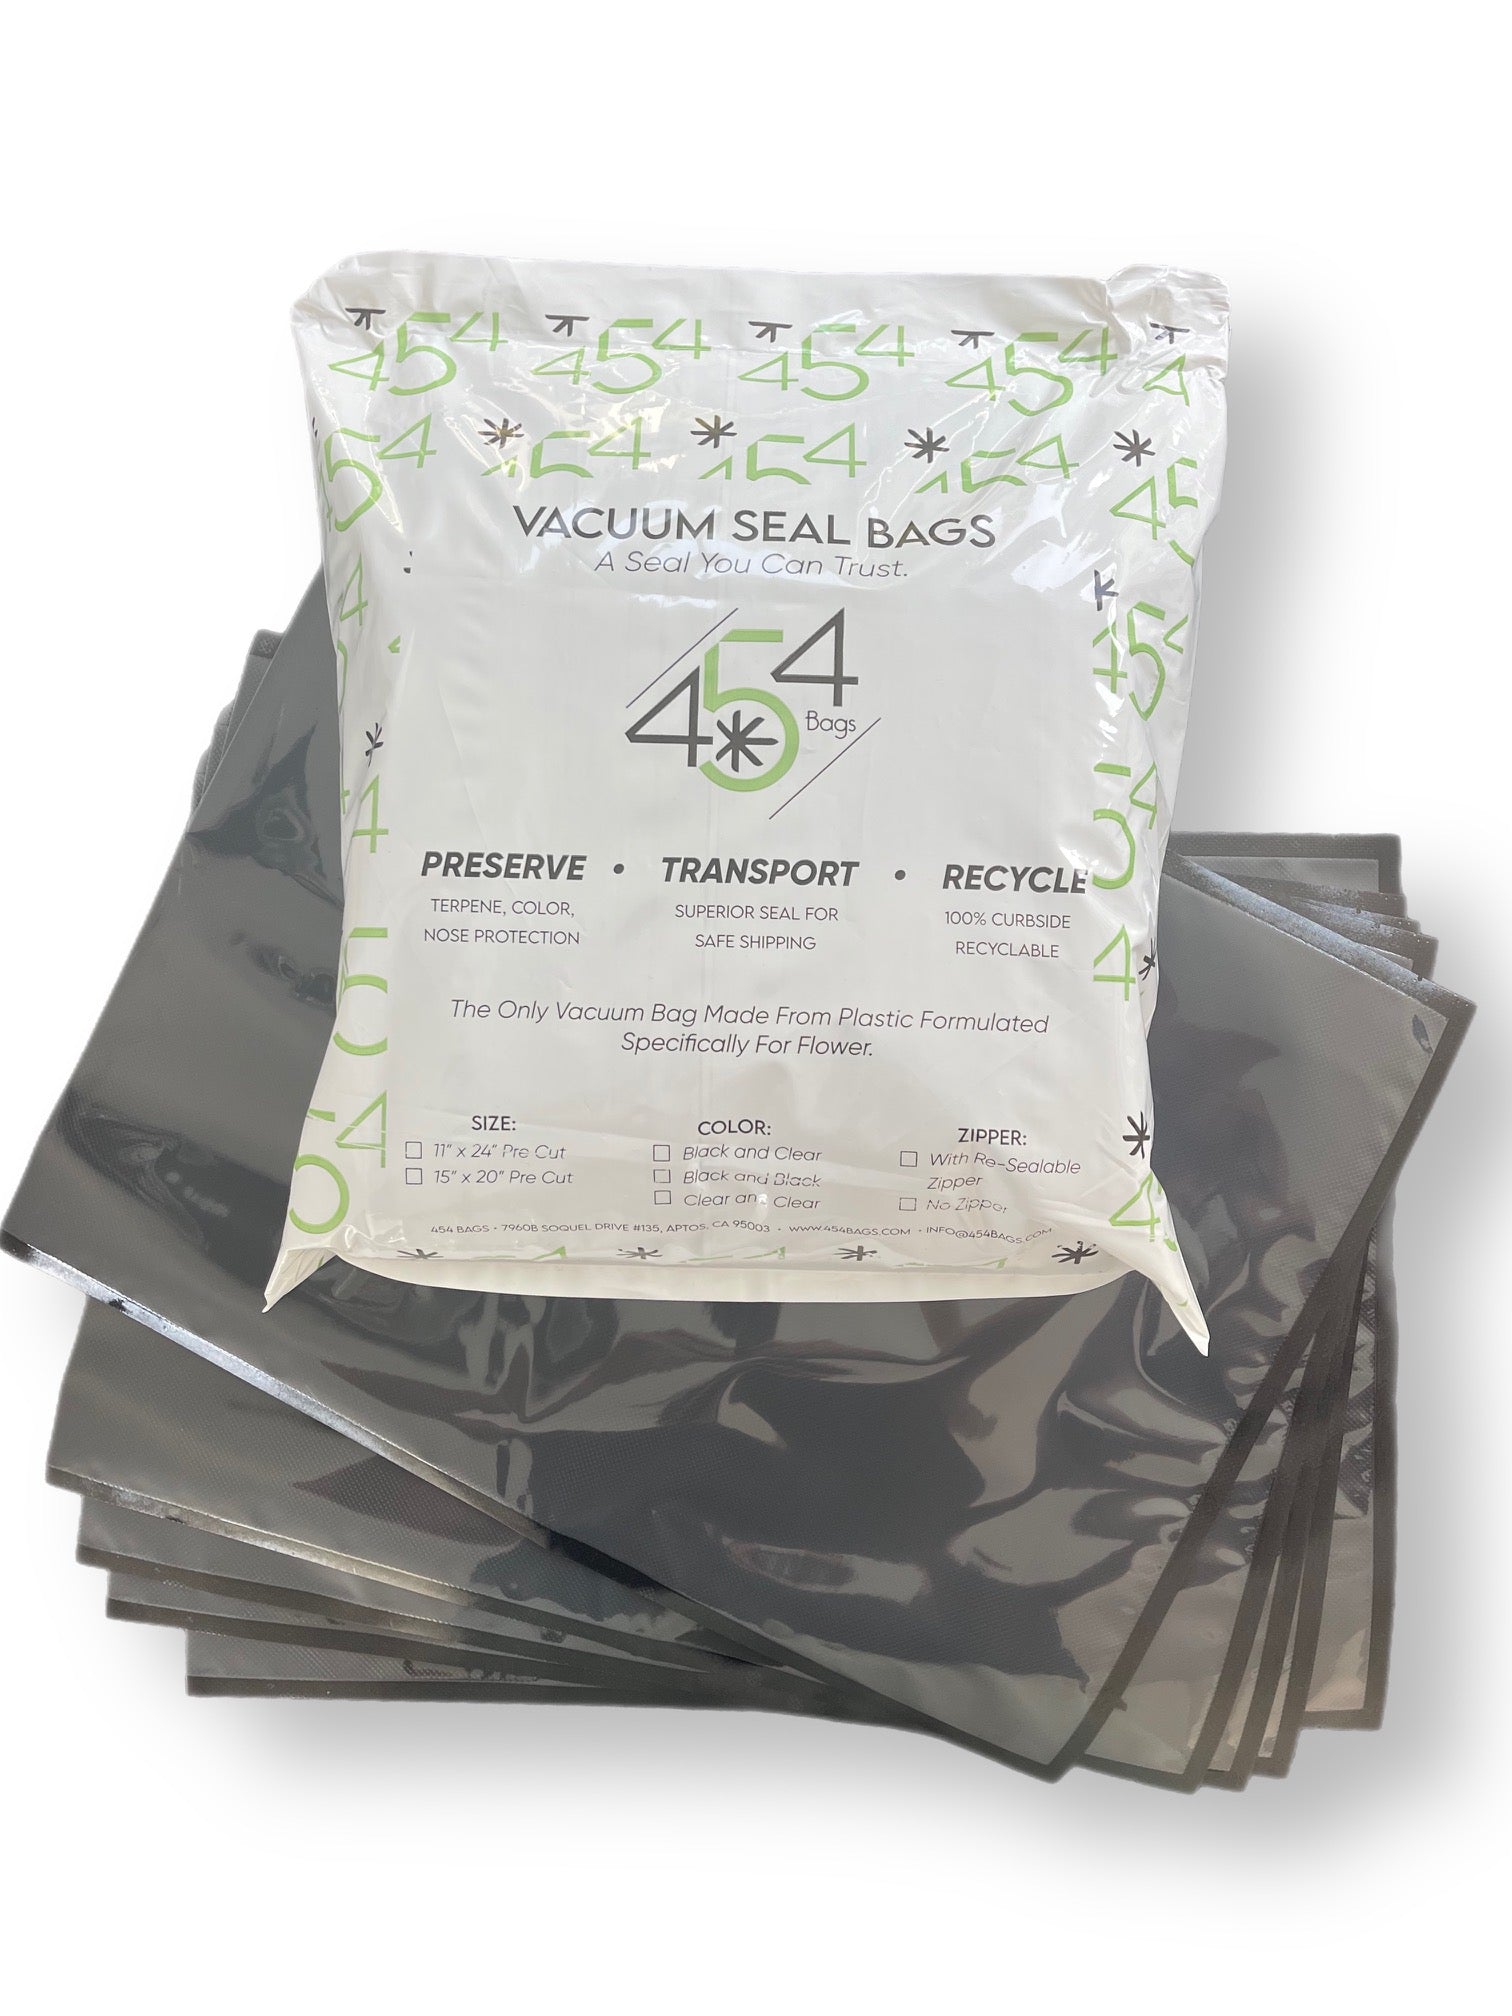 Packaging and samples of 454 Vacuum Bags, 15